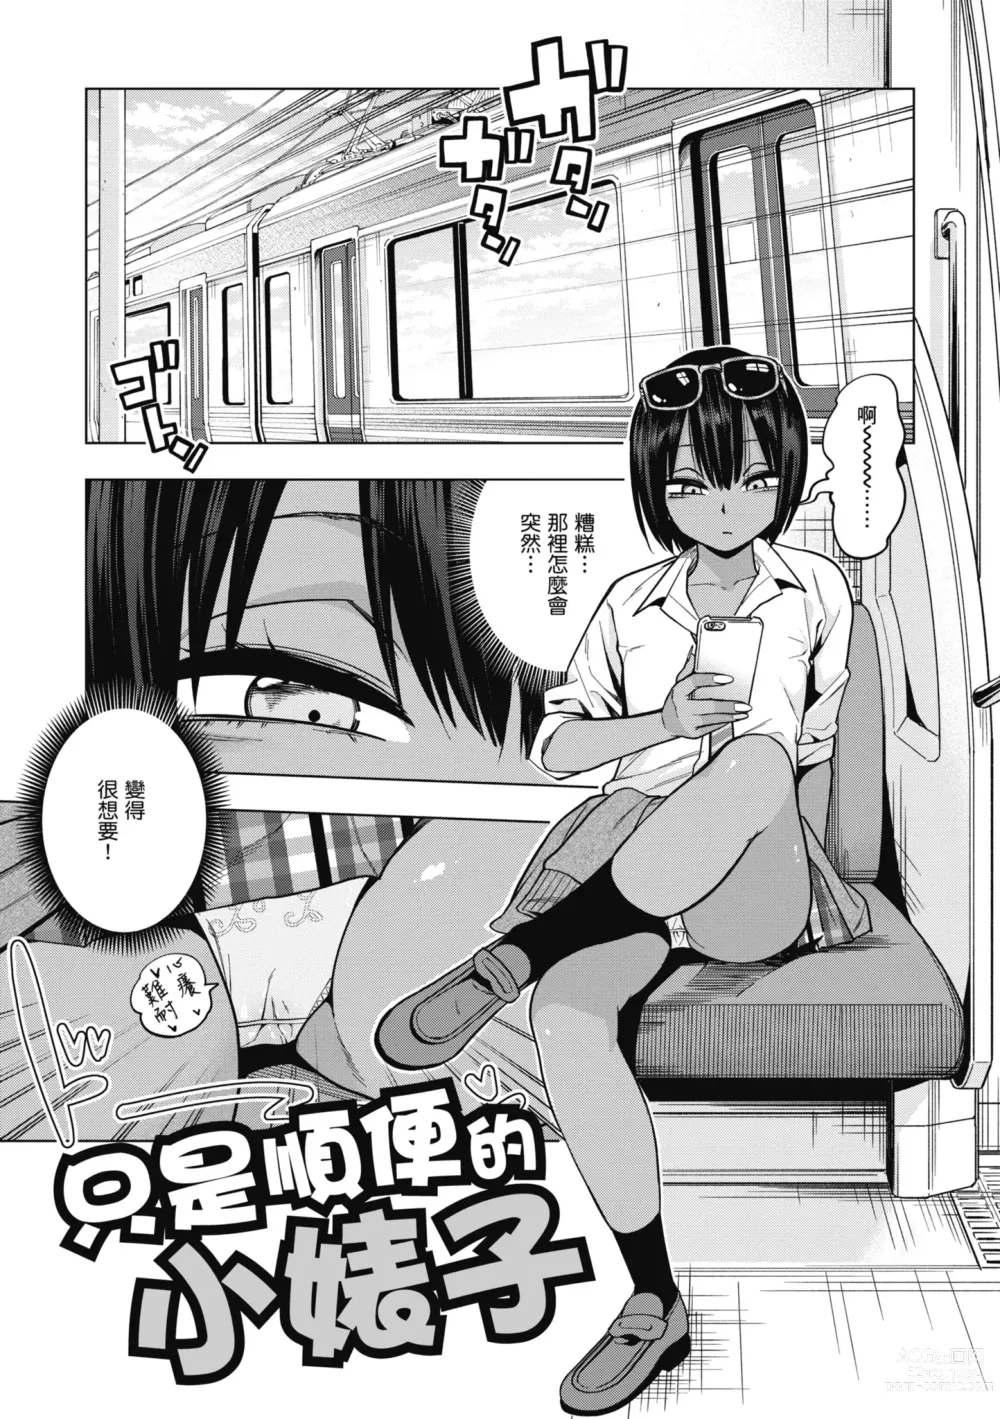 Page 7 of manga Fxxk Street Girls (decensored)